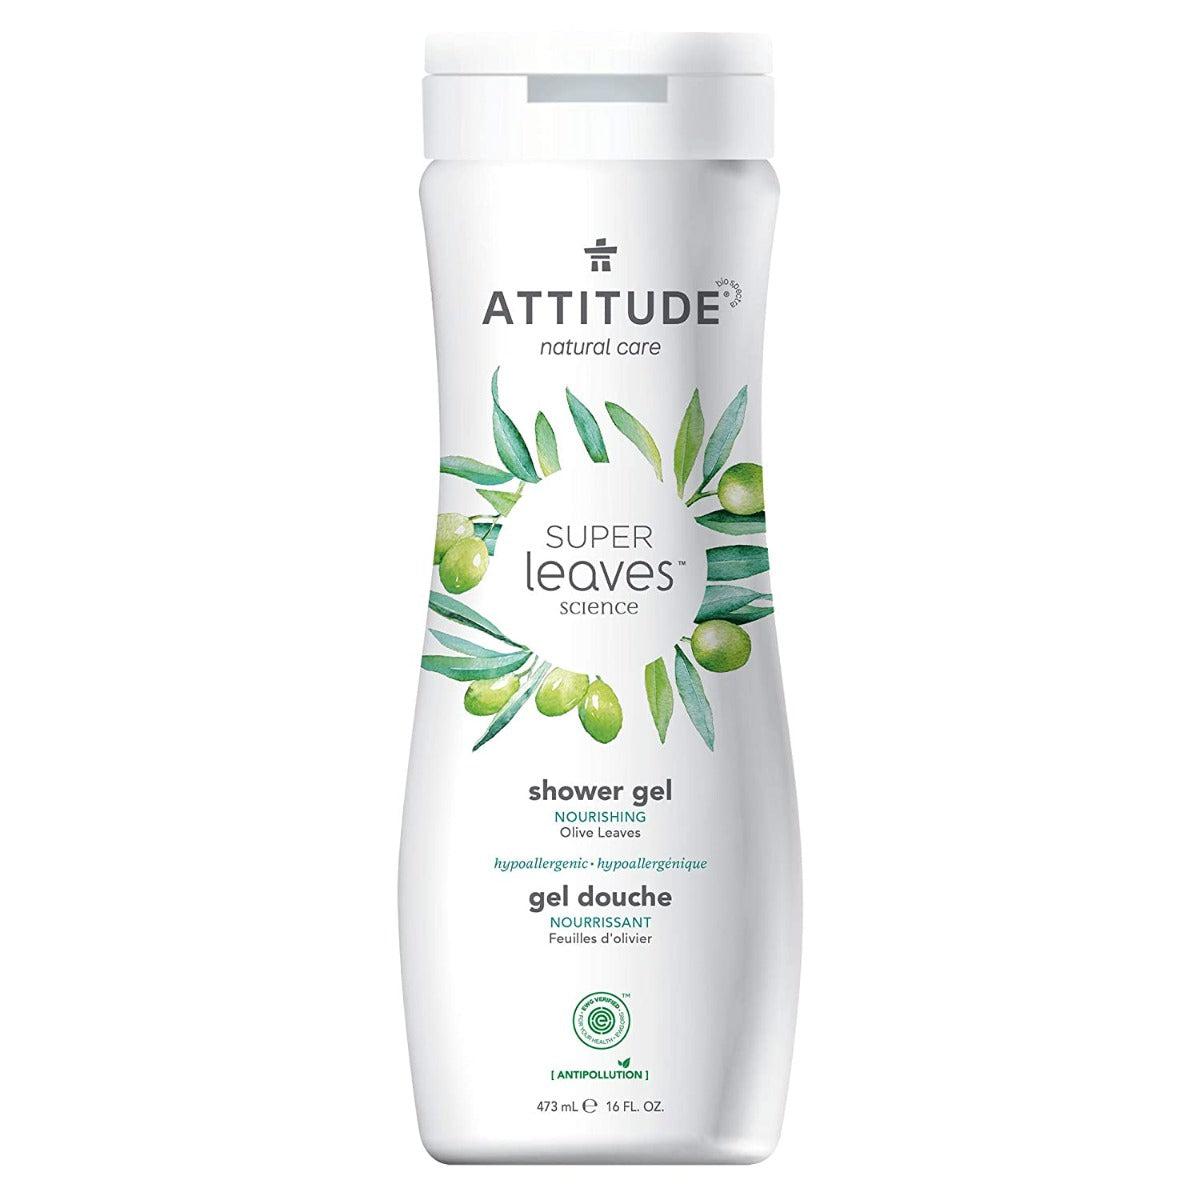 Attitude Super Leaves Natural Shower Gel Hypoallergenic Regenerating Olive Leaves SLS FREE 473ml